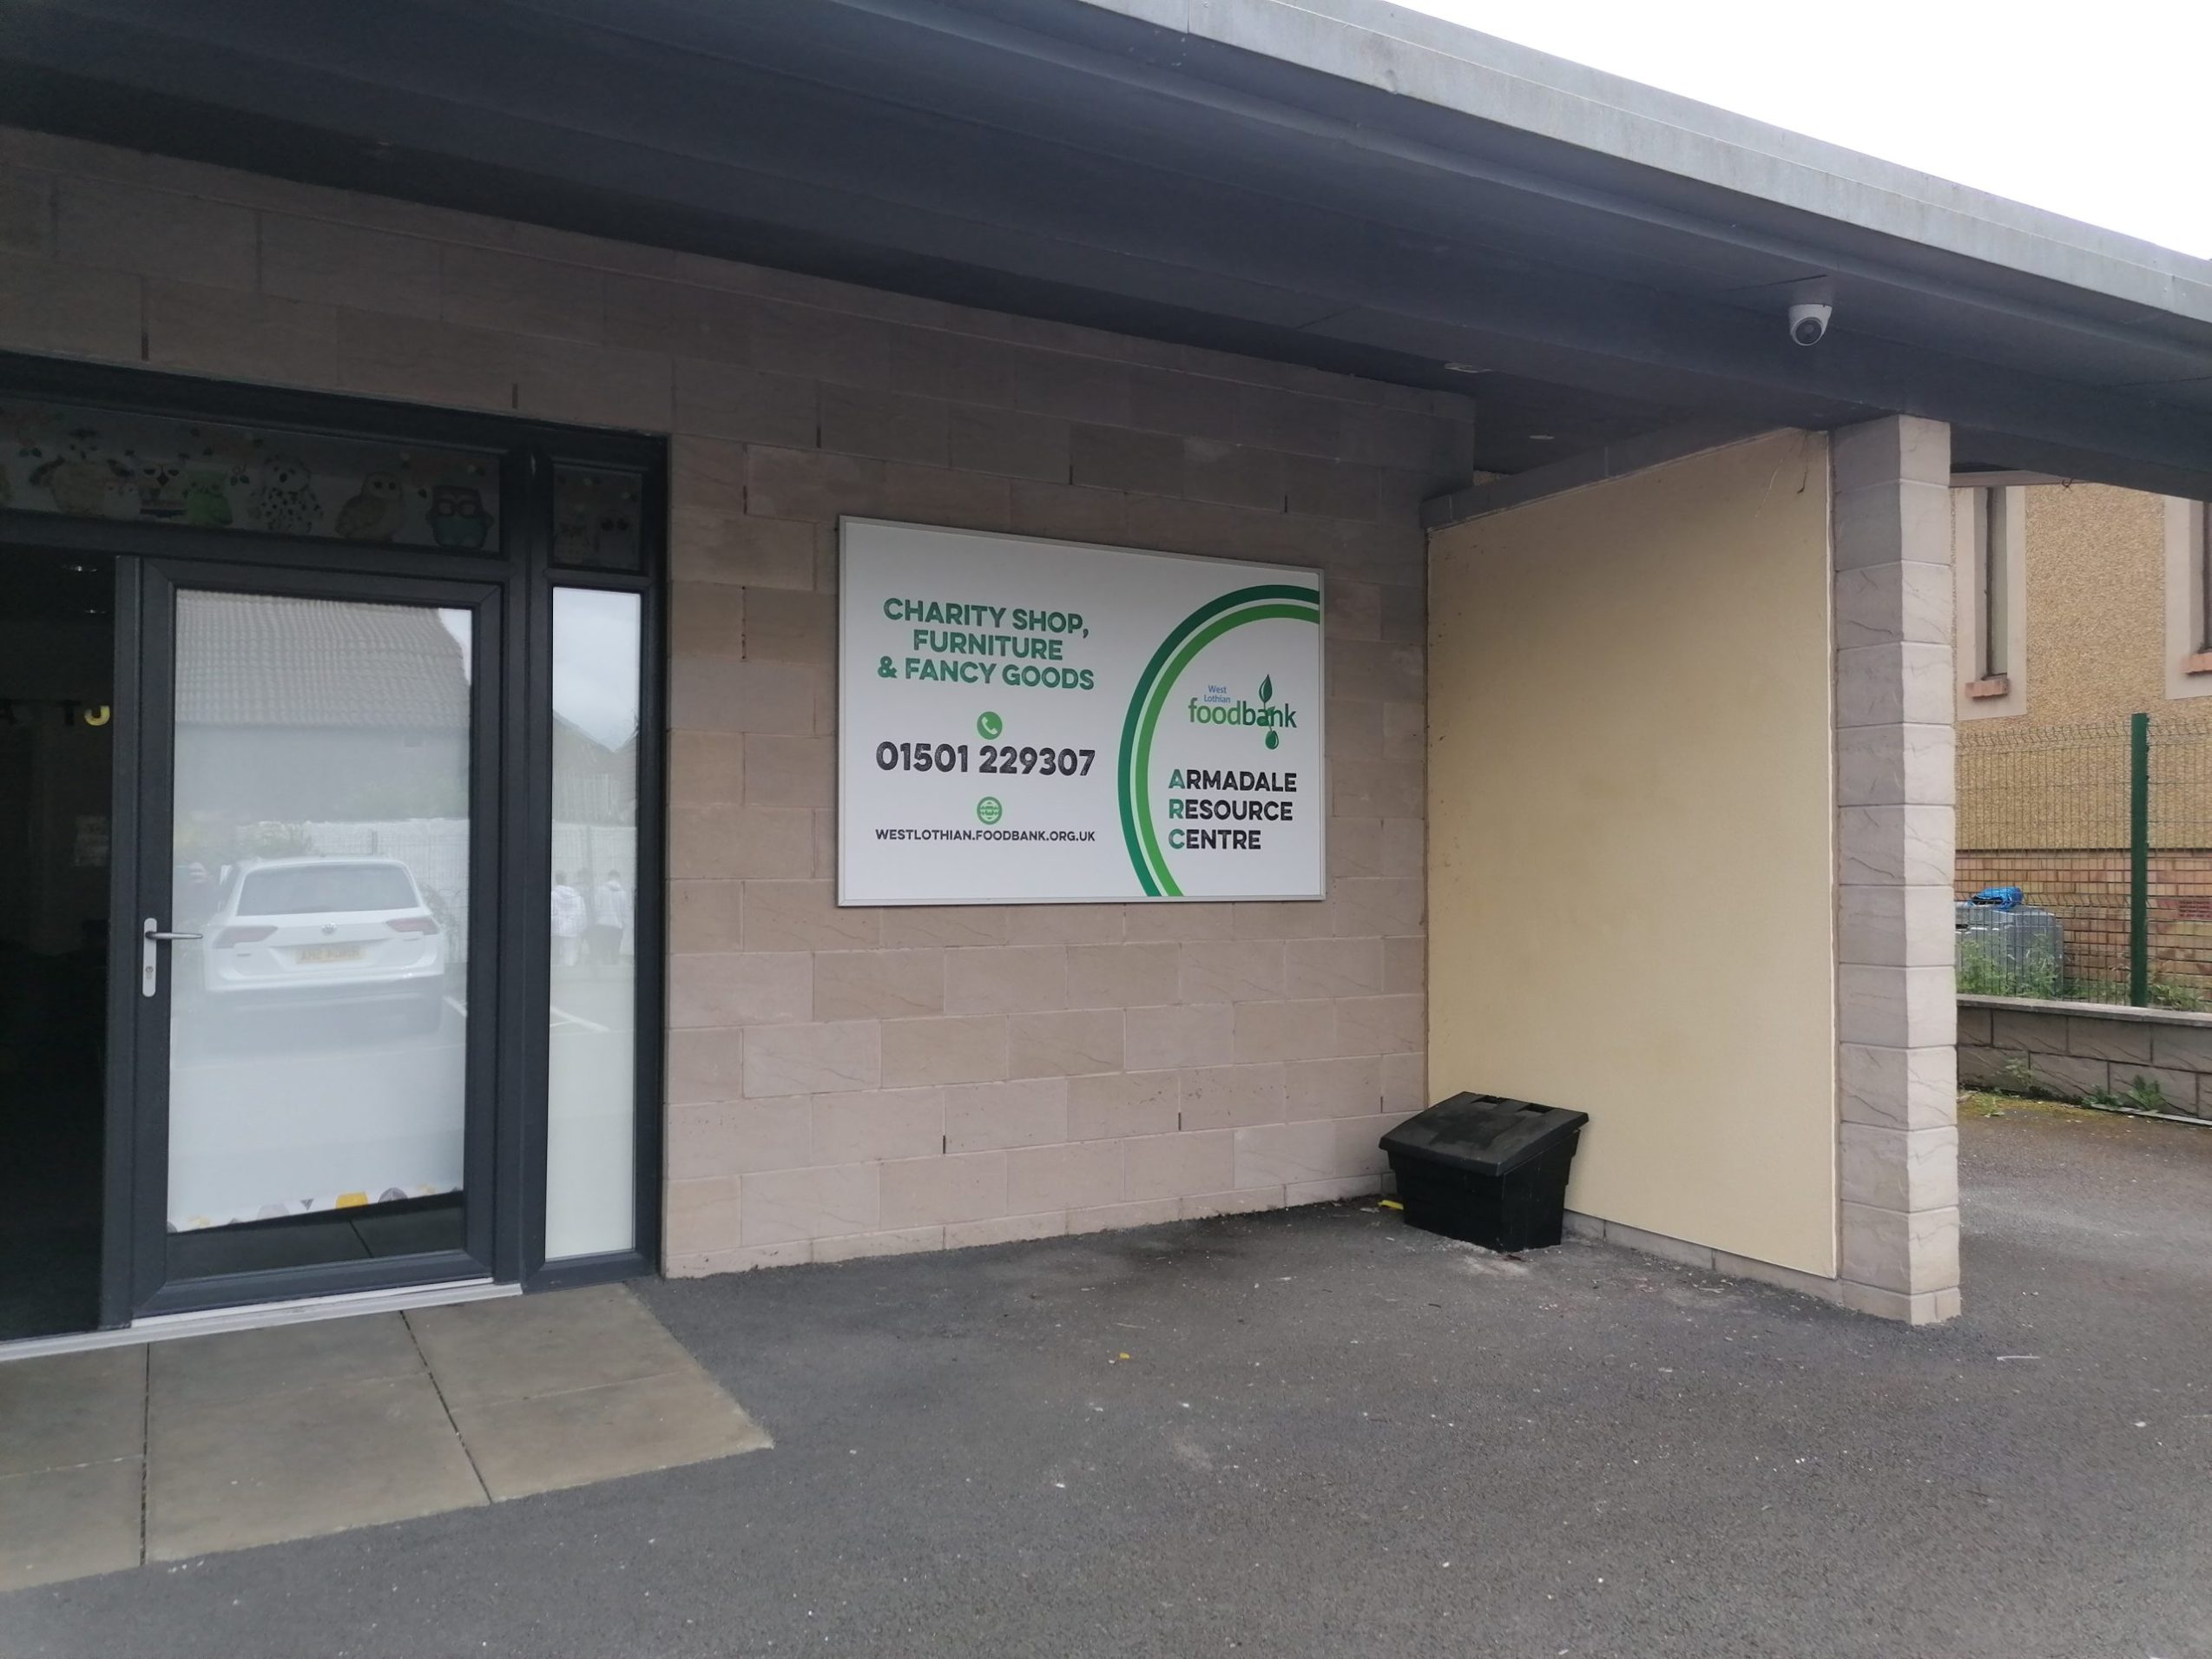 West Lothian Foodbank - Armadale Charity Shop